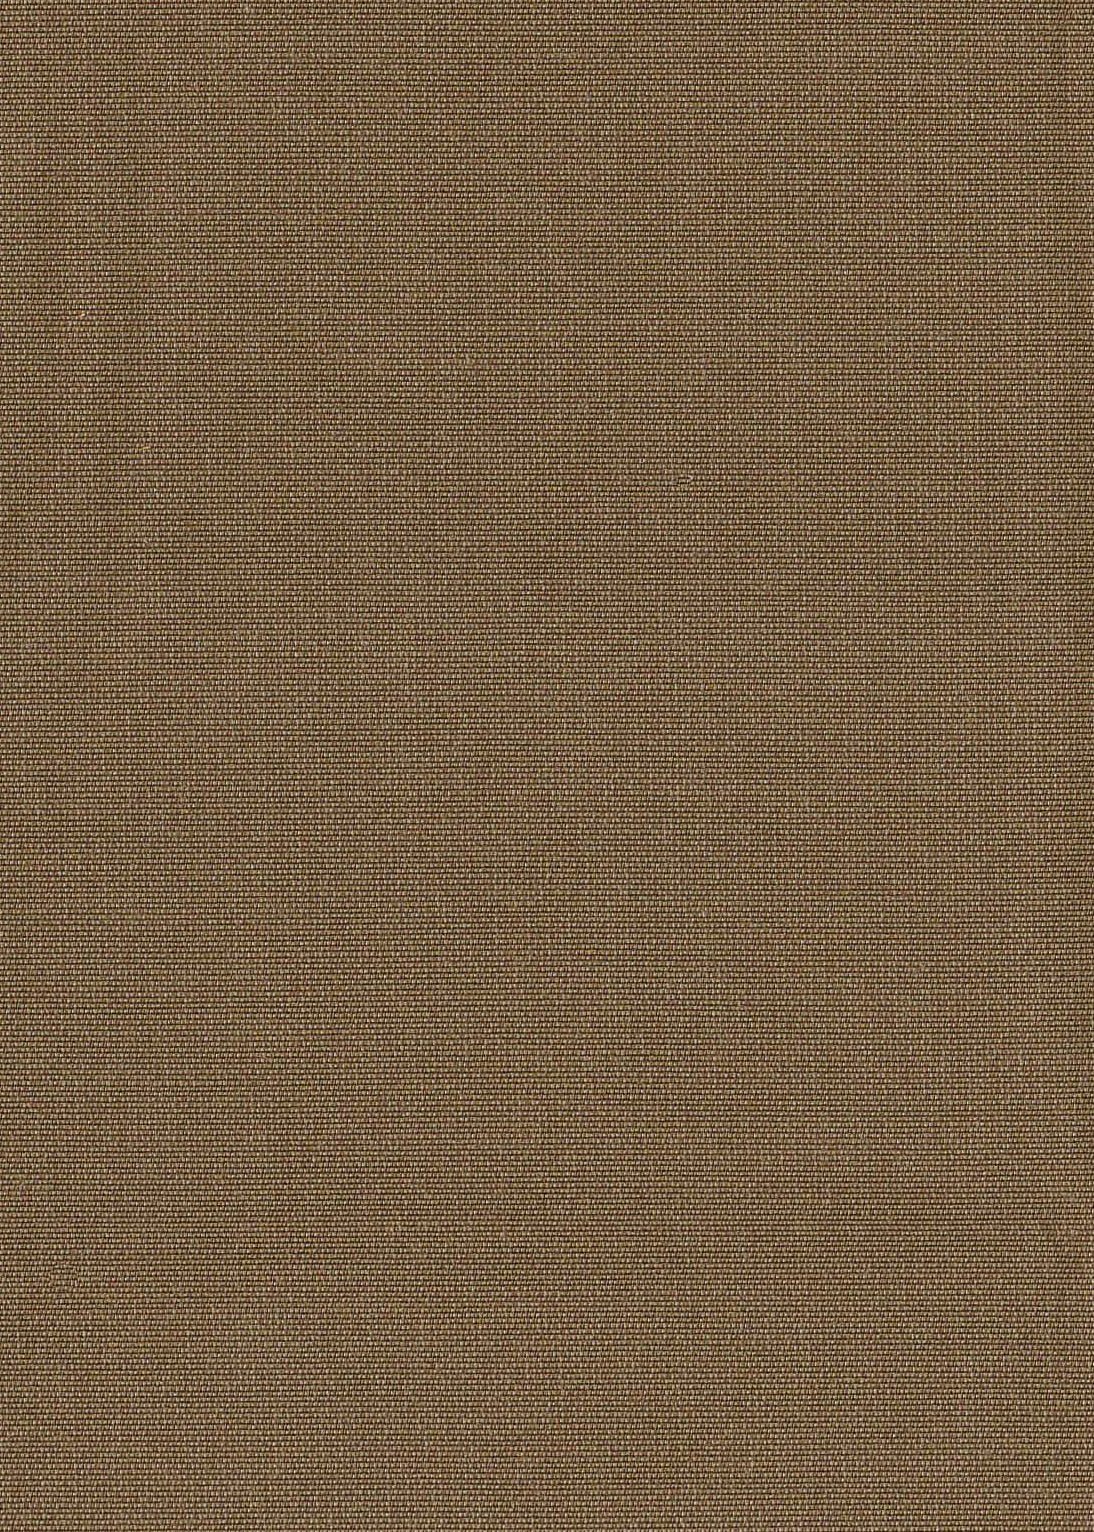 medium brown silk and cotton fabric